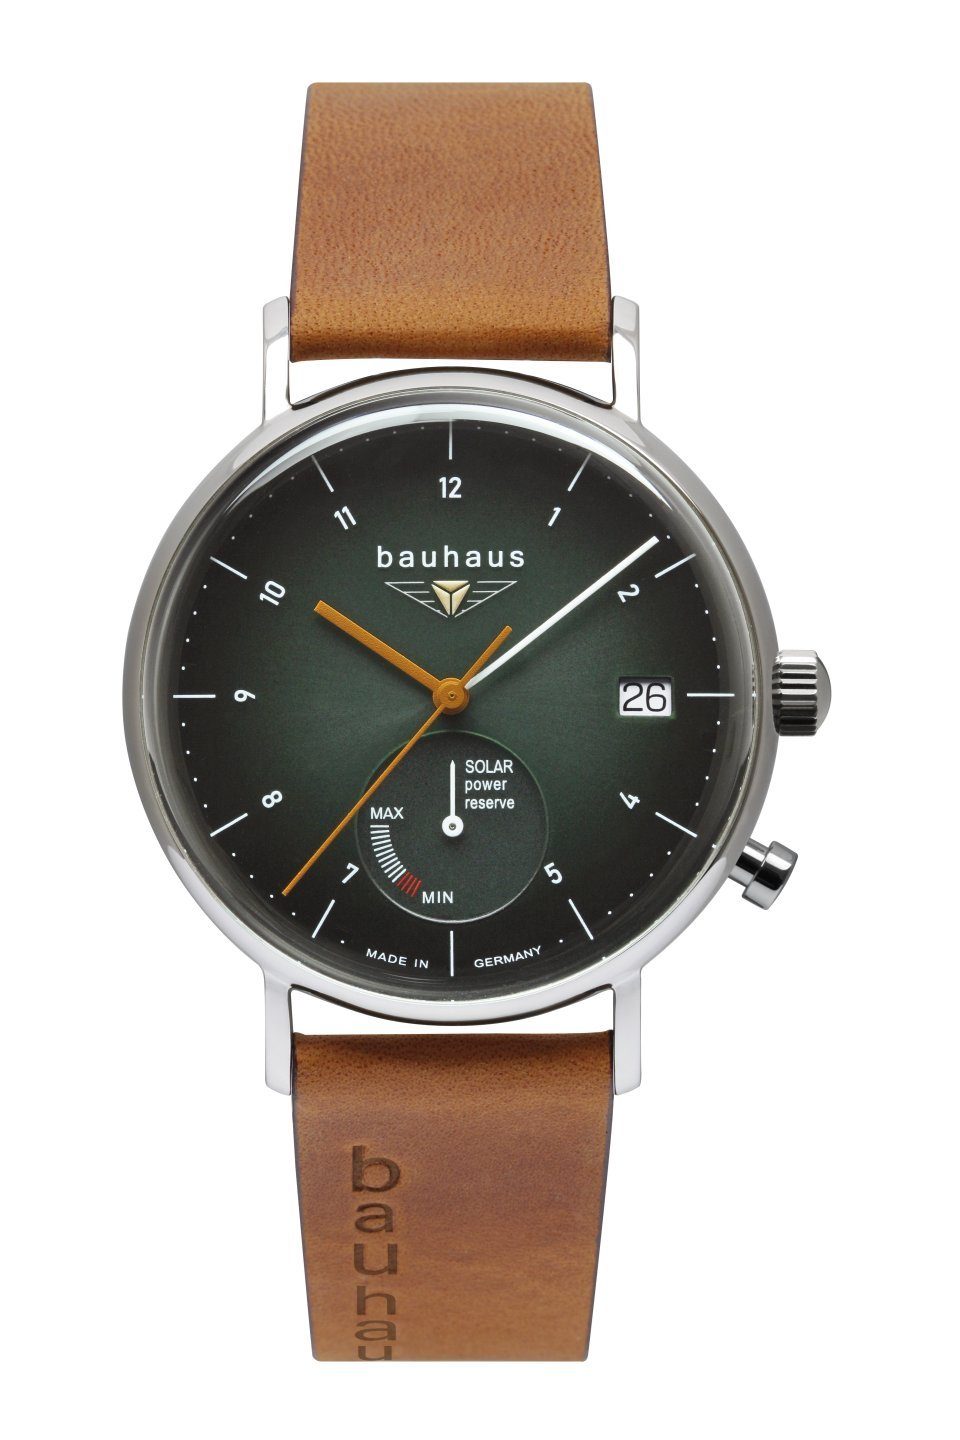 bauhaus Solaruhr 2112-4, Armbanduhr, Herrenuhr, Datum, Made in Germany